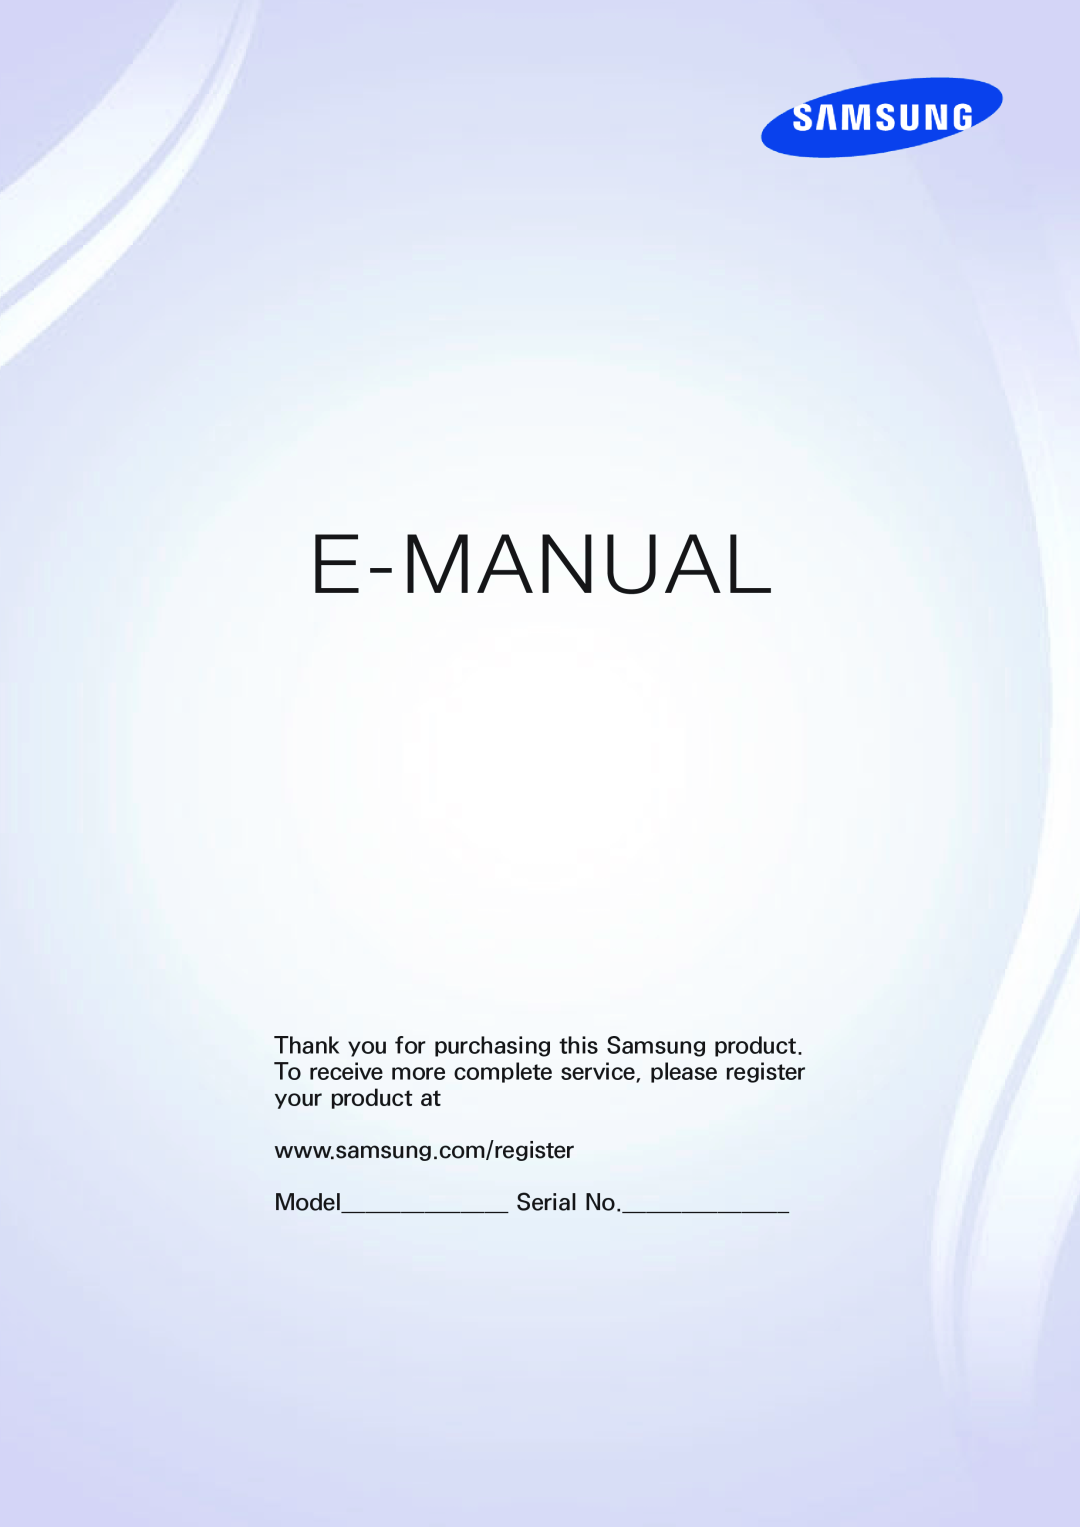 Samsung SEK-1000 manual E-Manual, Model______________ Serial No.______________ 